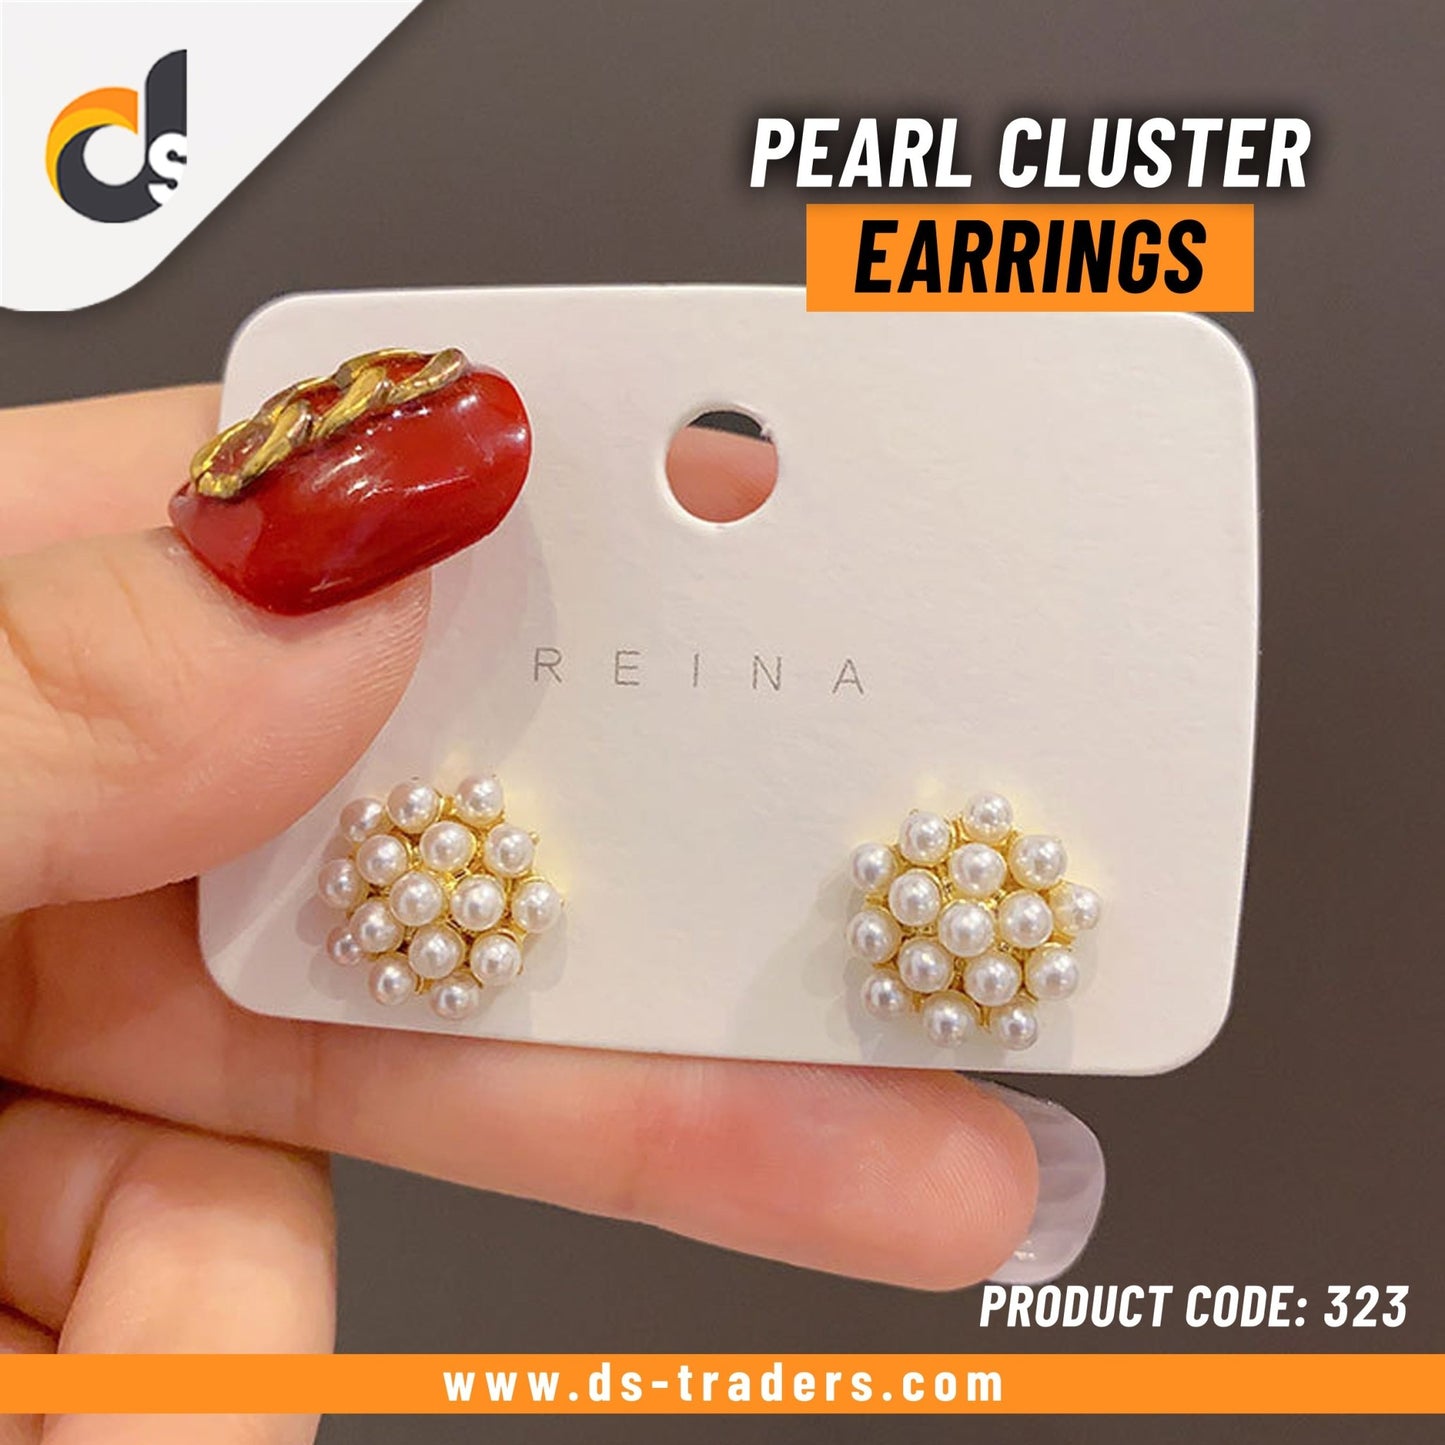 Pearl Cluster Earrings - DS Traders